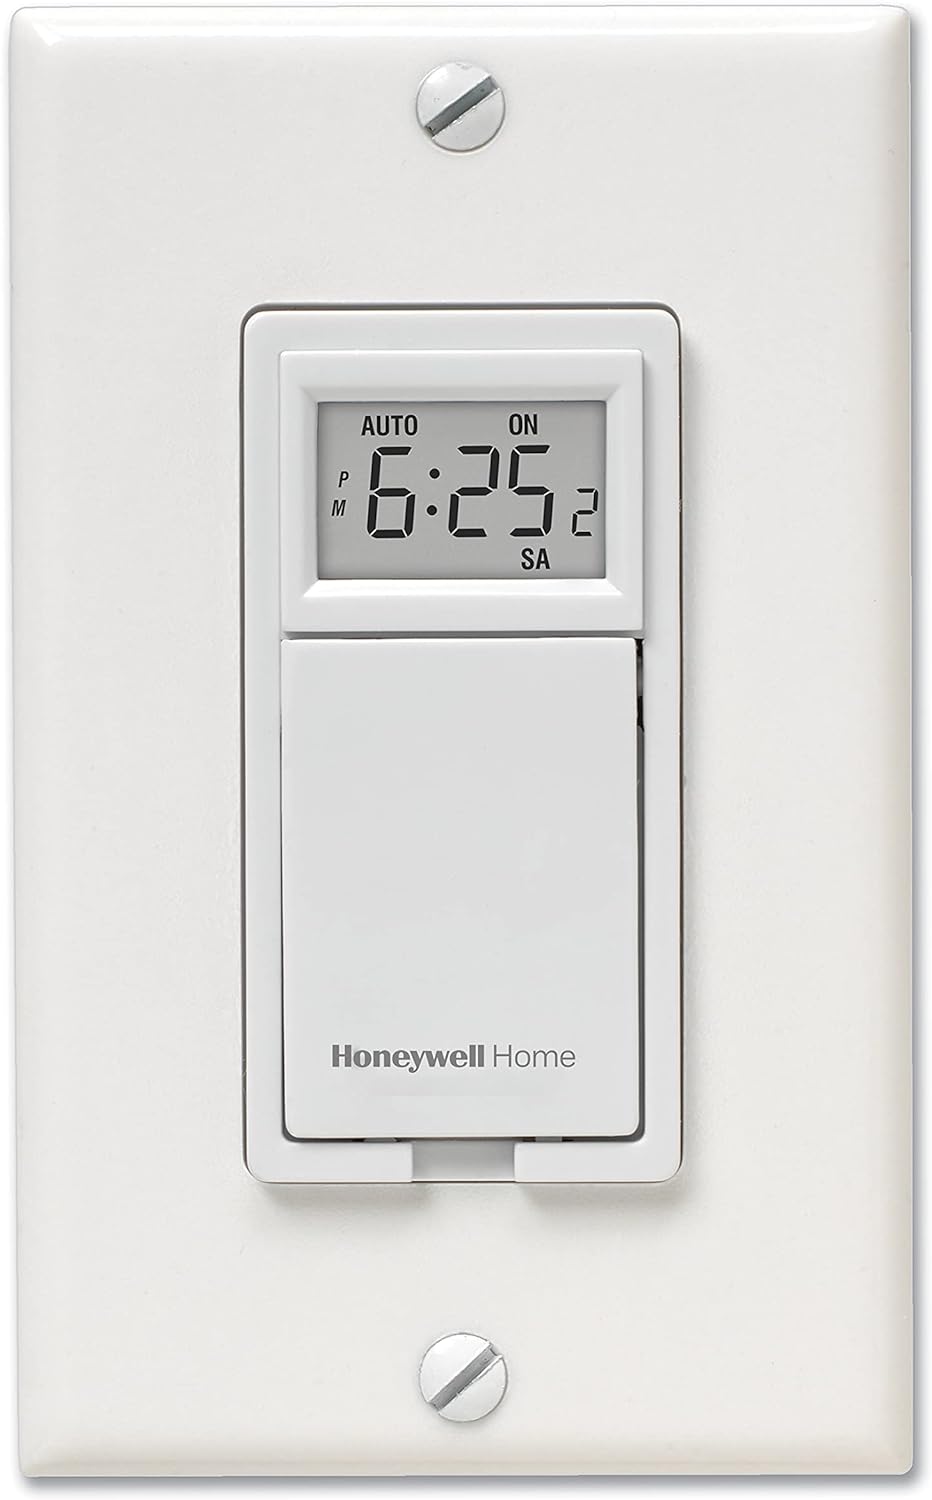 Honeywell Home RPLS730B1000/U RPLS730B1000 7-Day Programmable Light Switch Timer, White